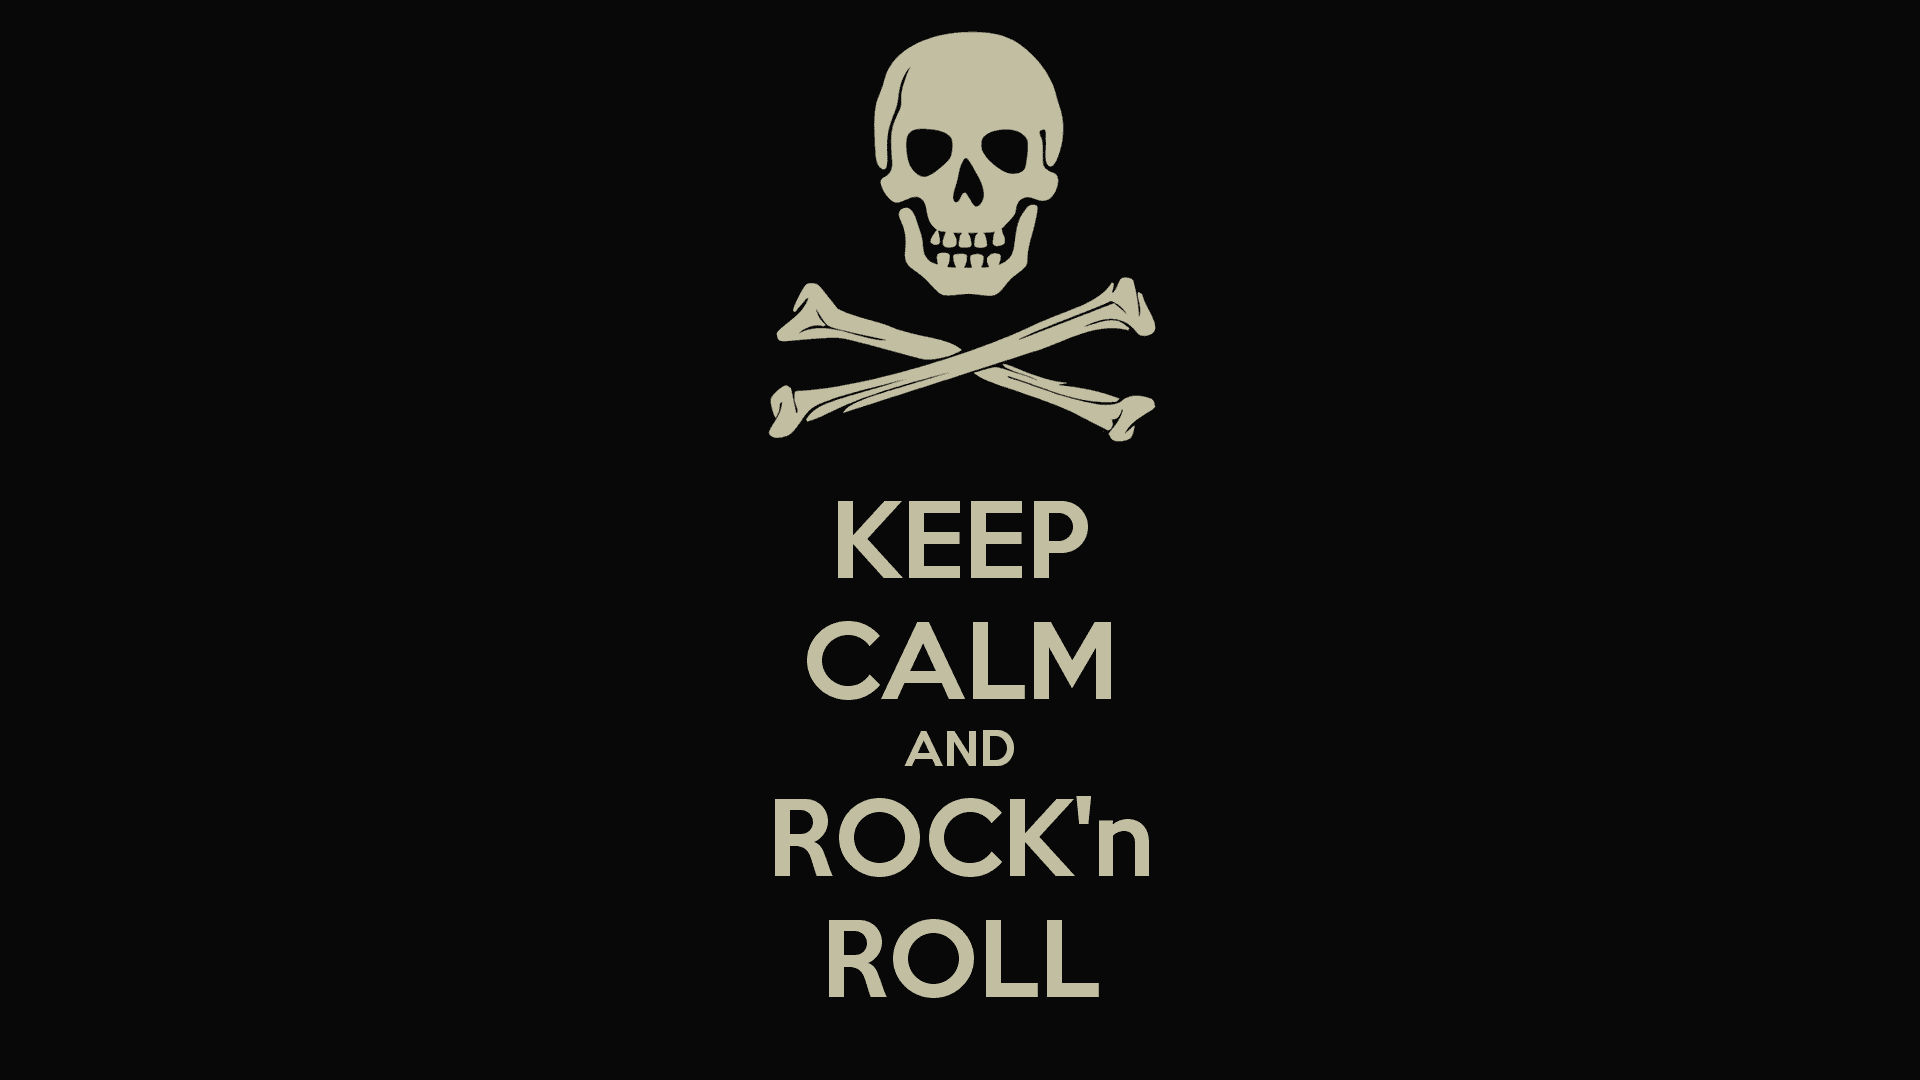 Keep Calm Rockn Roll Skulland Crossbones